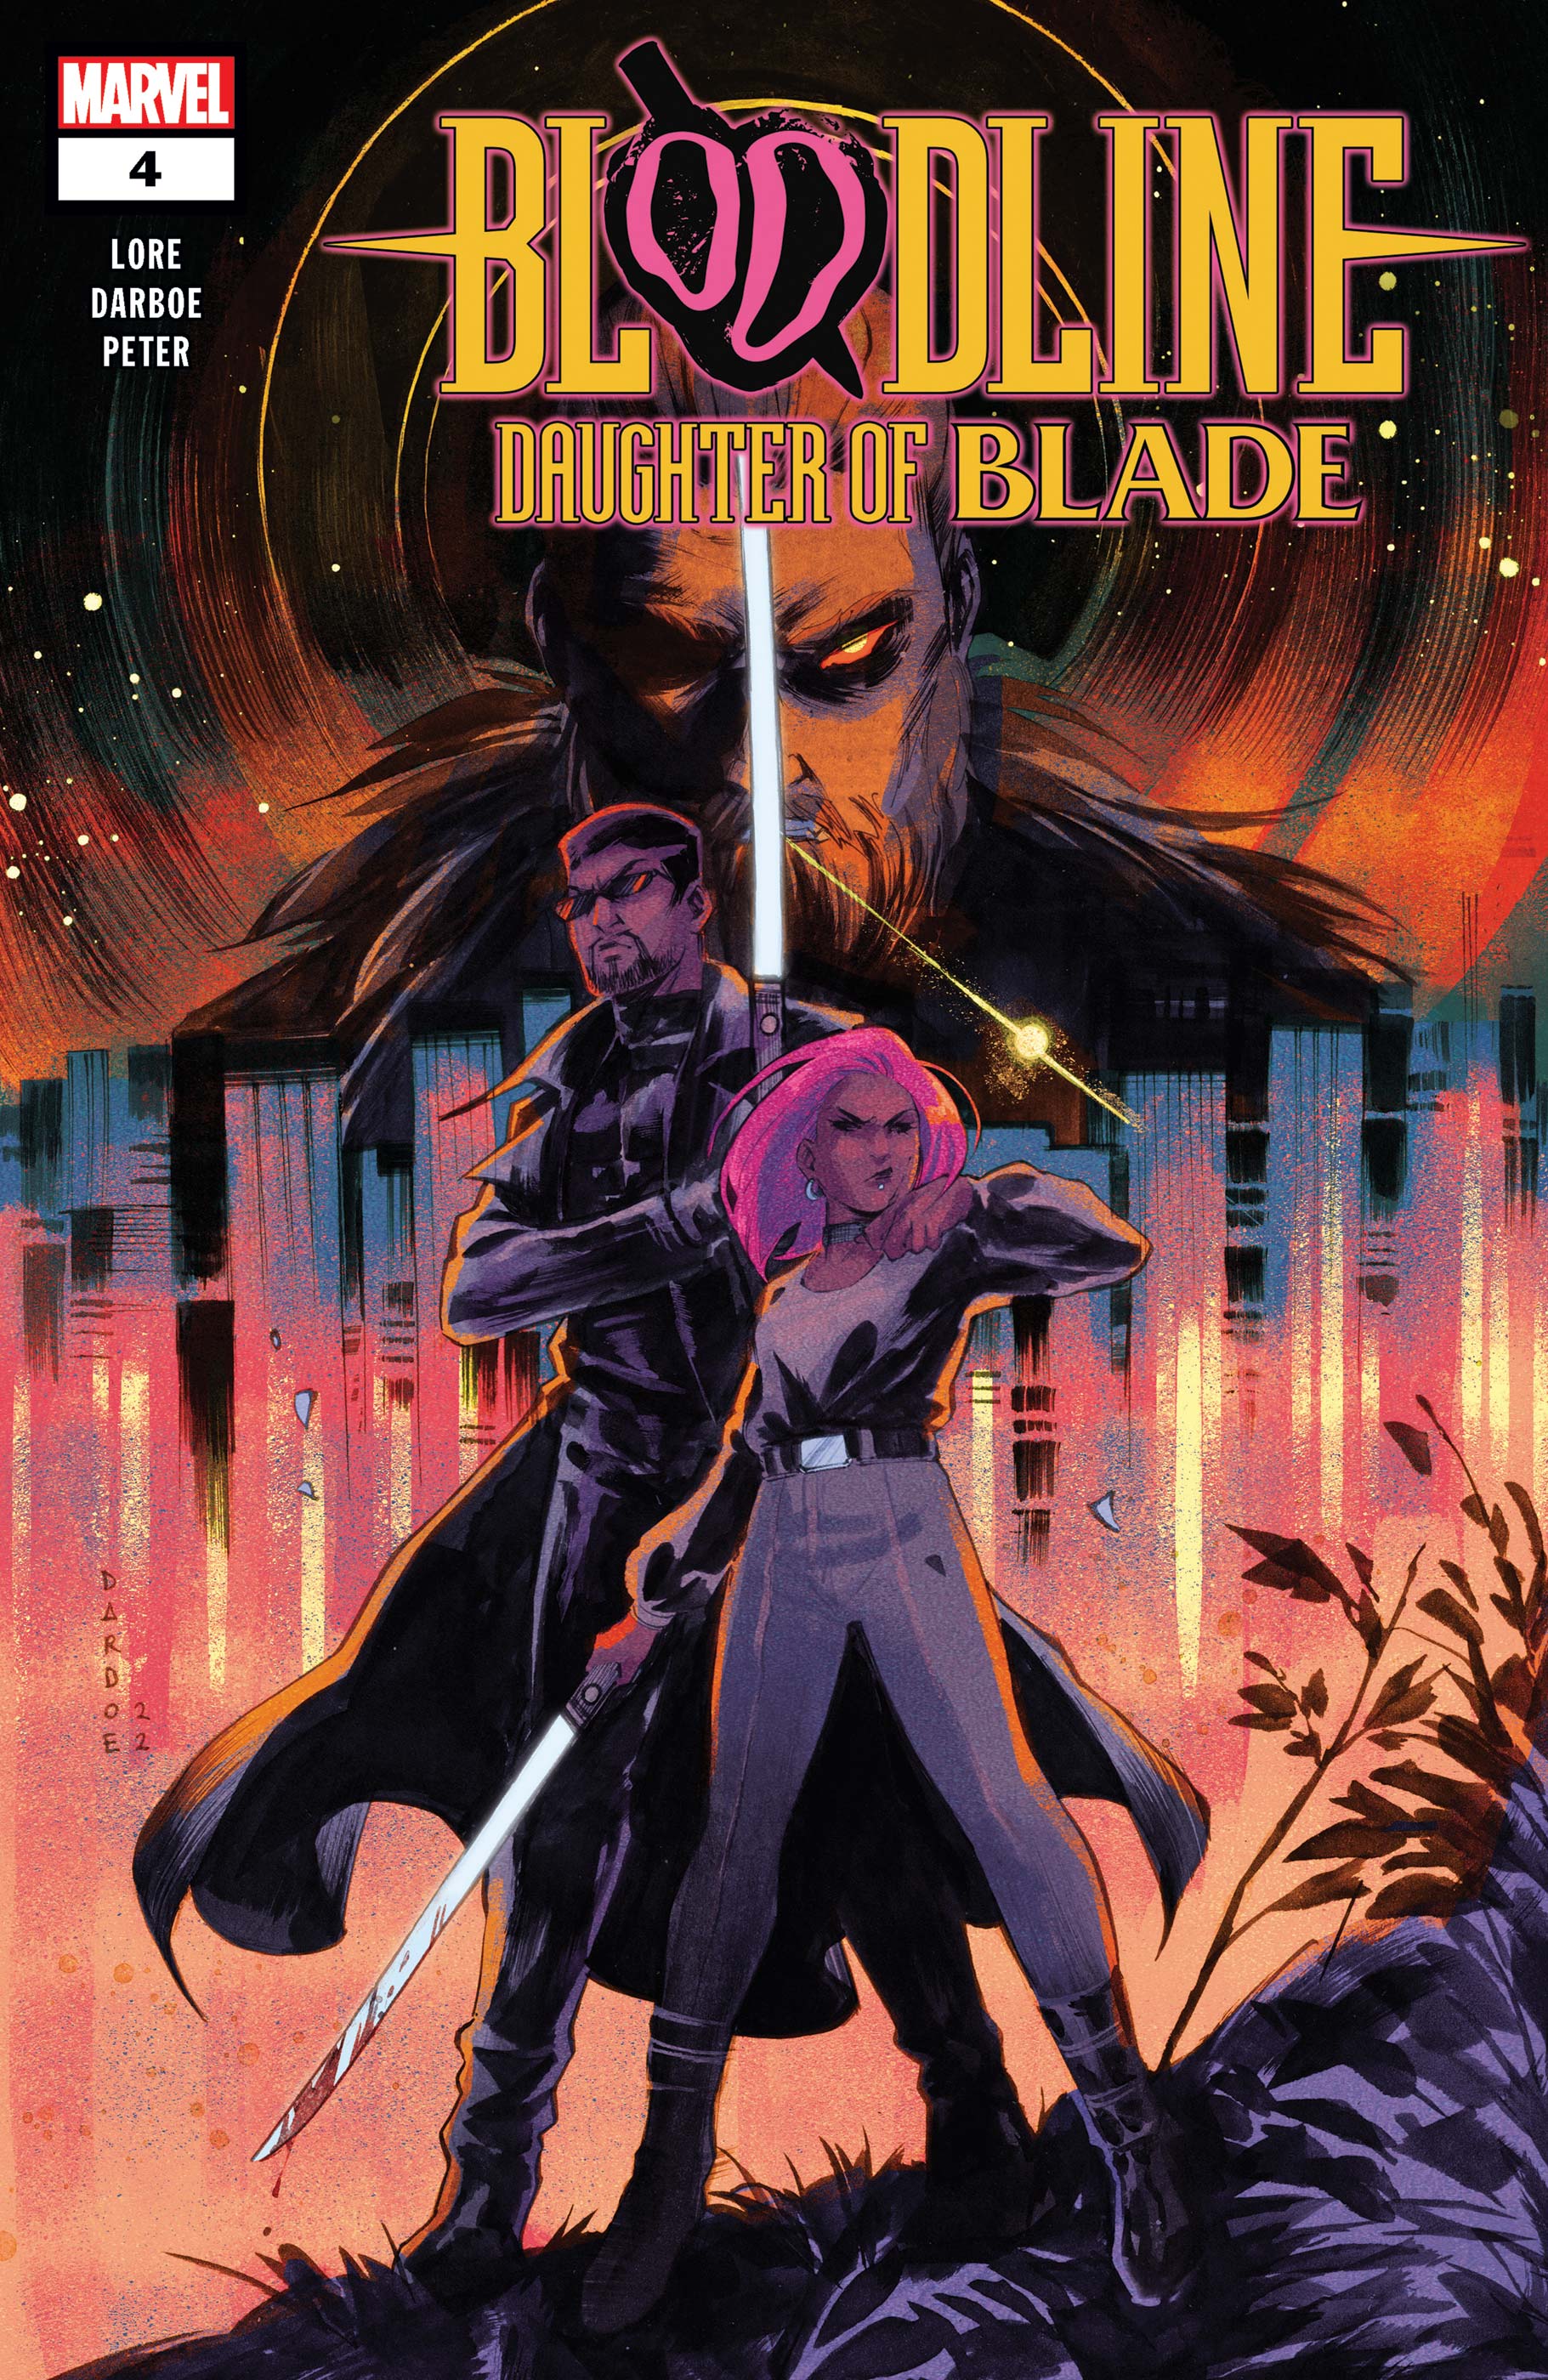 Bloodline Daughter of Blade #4